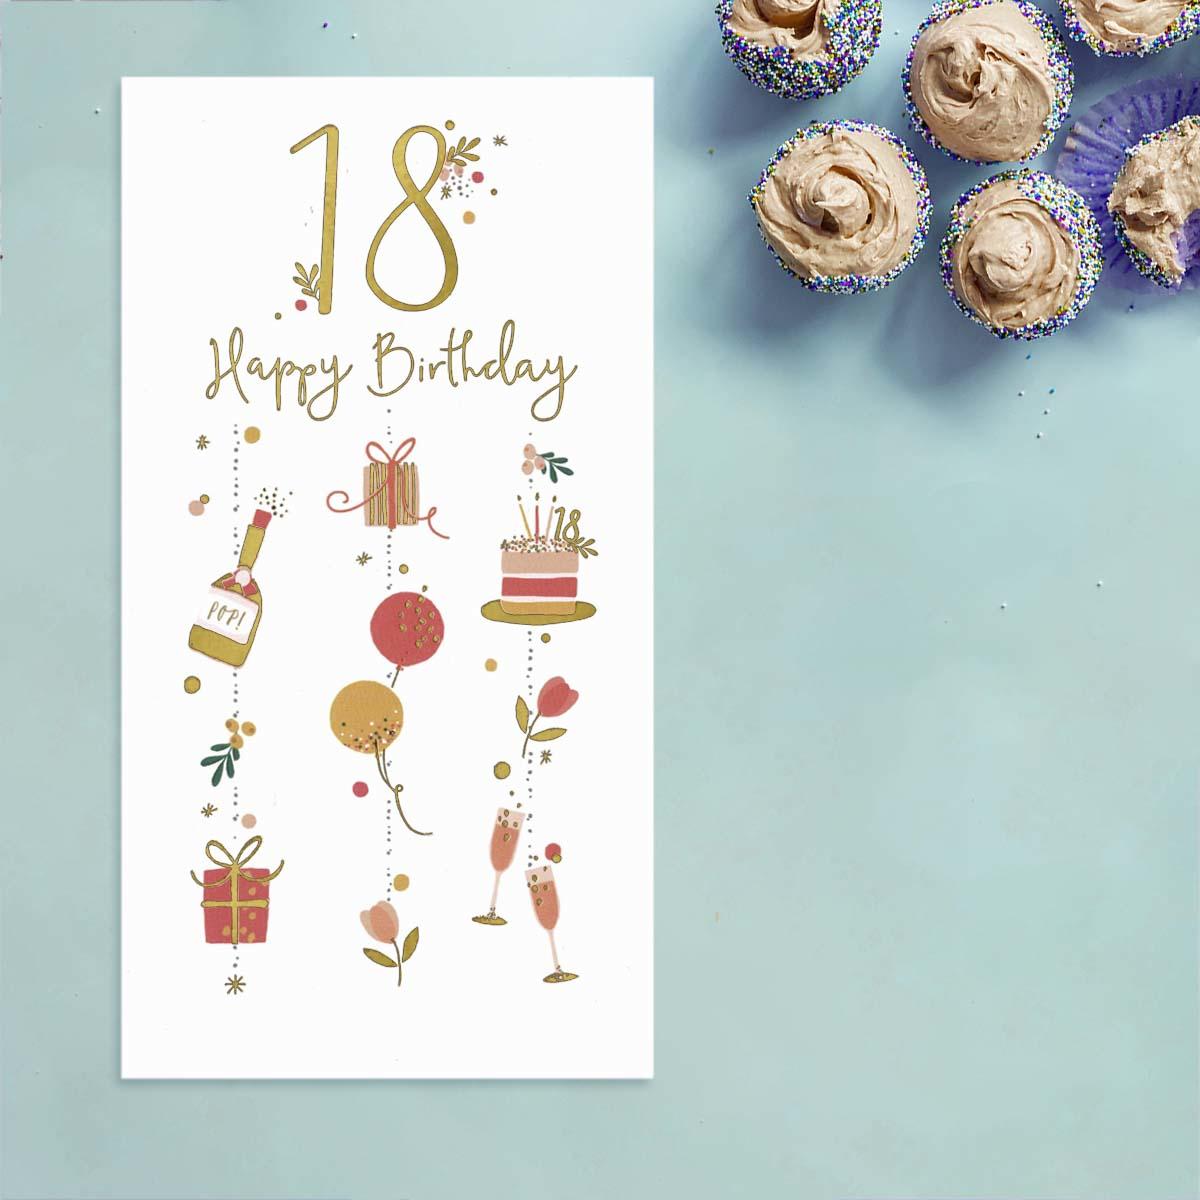 Simply Precious - 18 Happy Birthday Pop Card Front Image